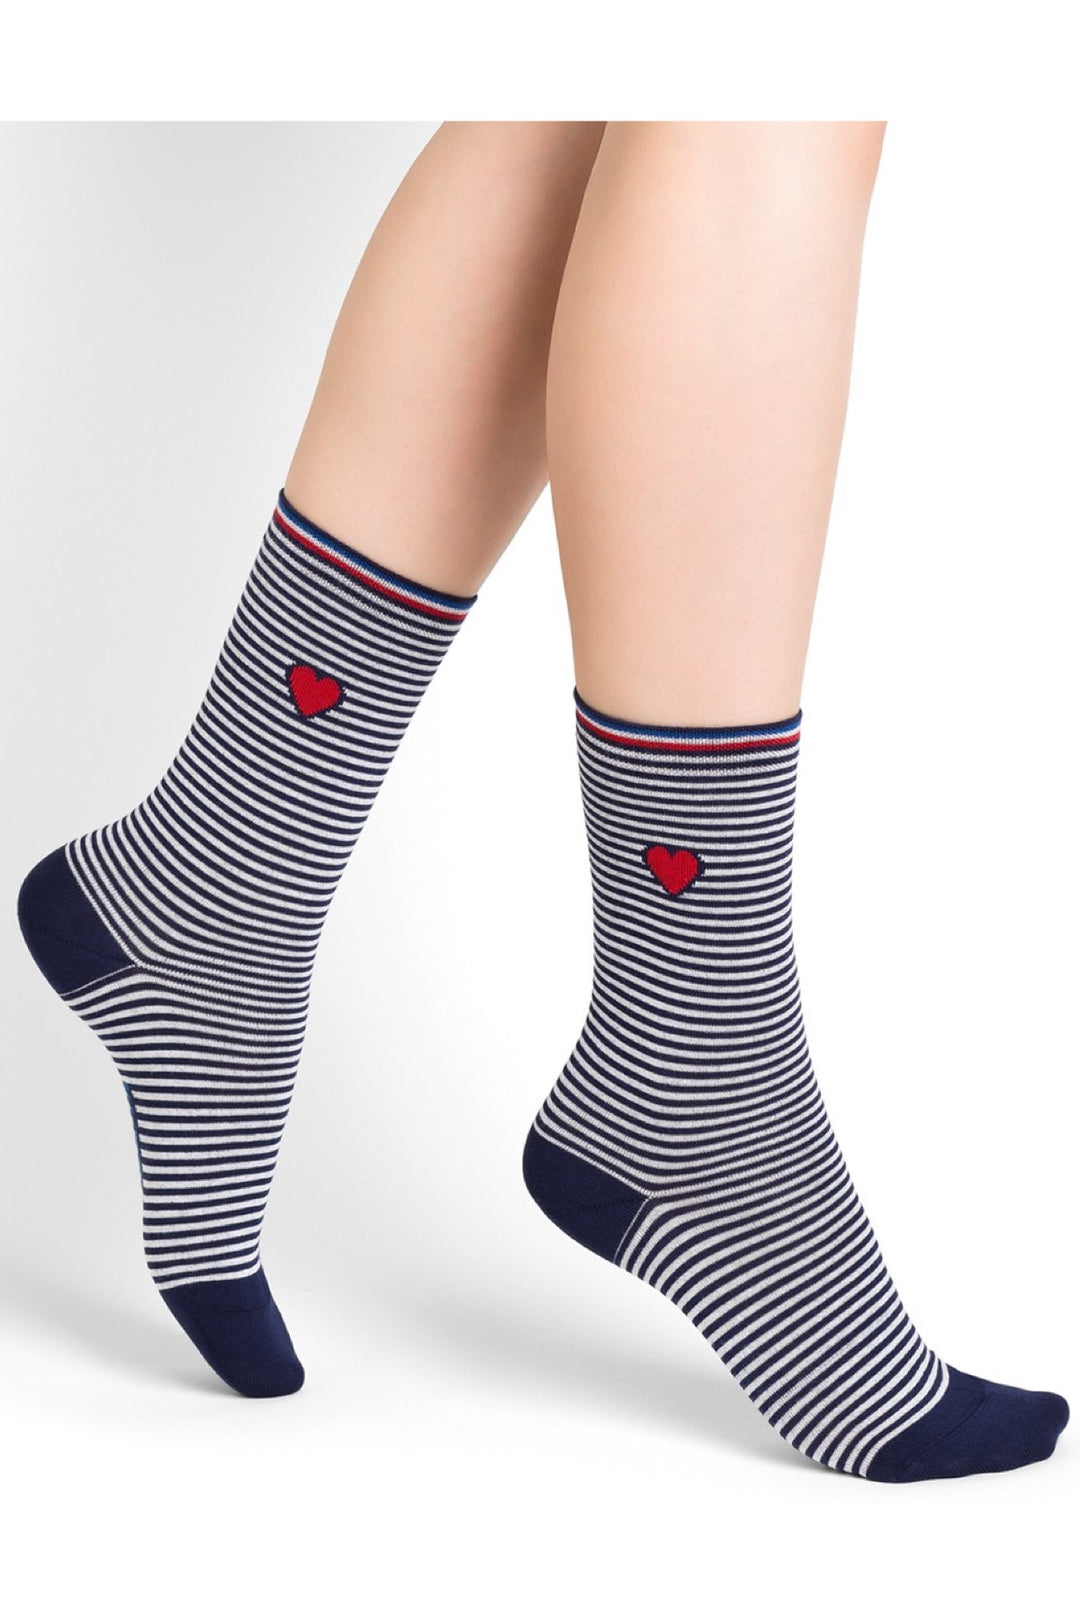 Sailor pattern socks